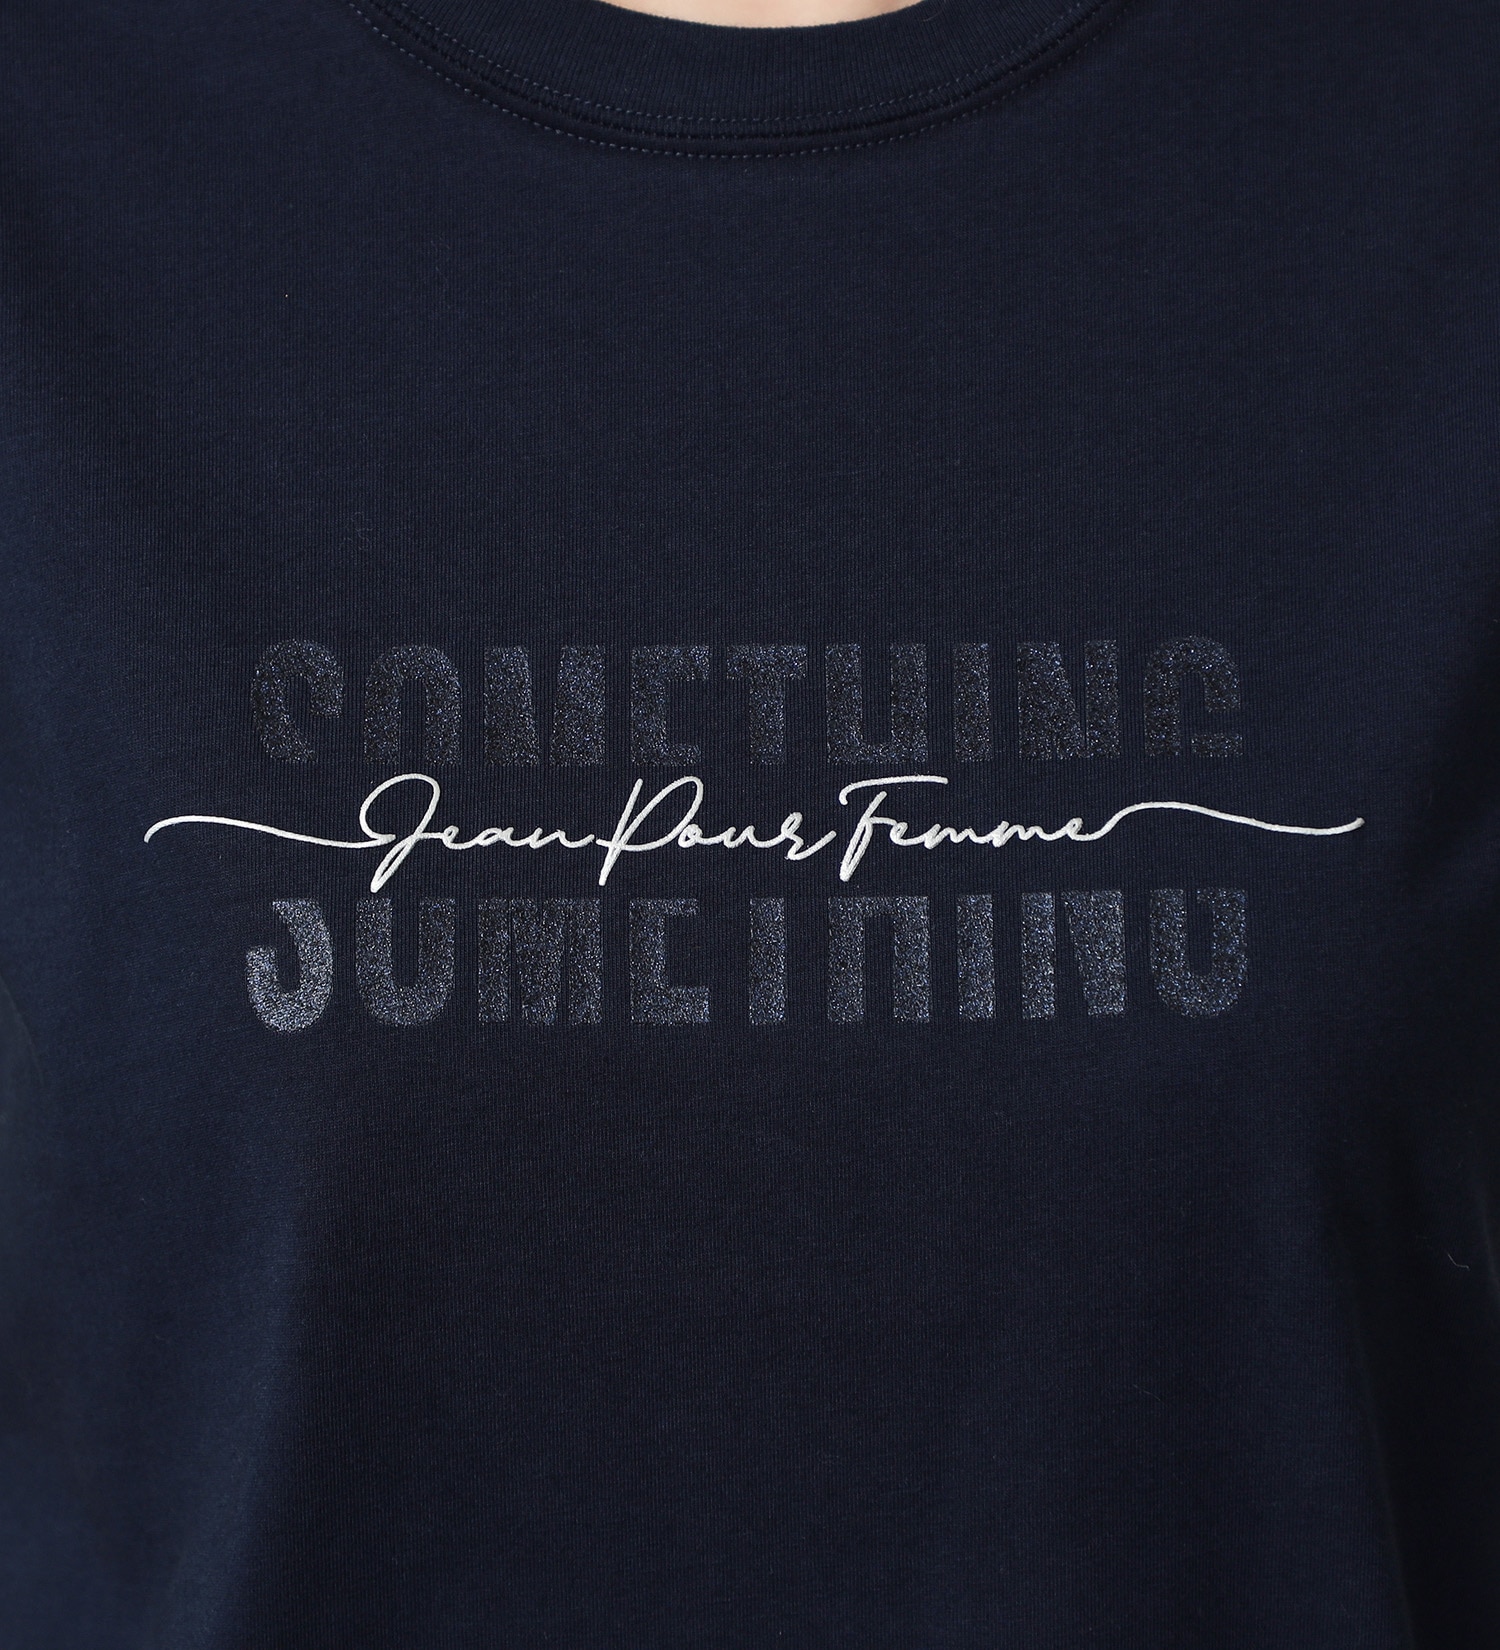 SOMETHING(サムシング)のSOMETHING シャイニープリントTシャツ【半袖】|トップス/Tシャツ/カットソー/レディース|ネイビー